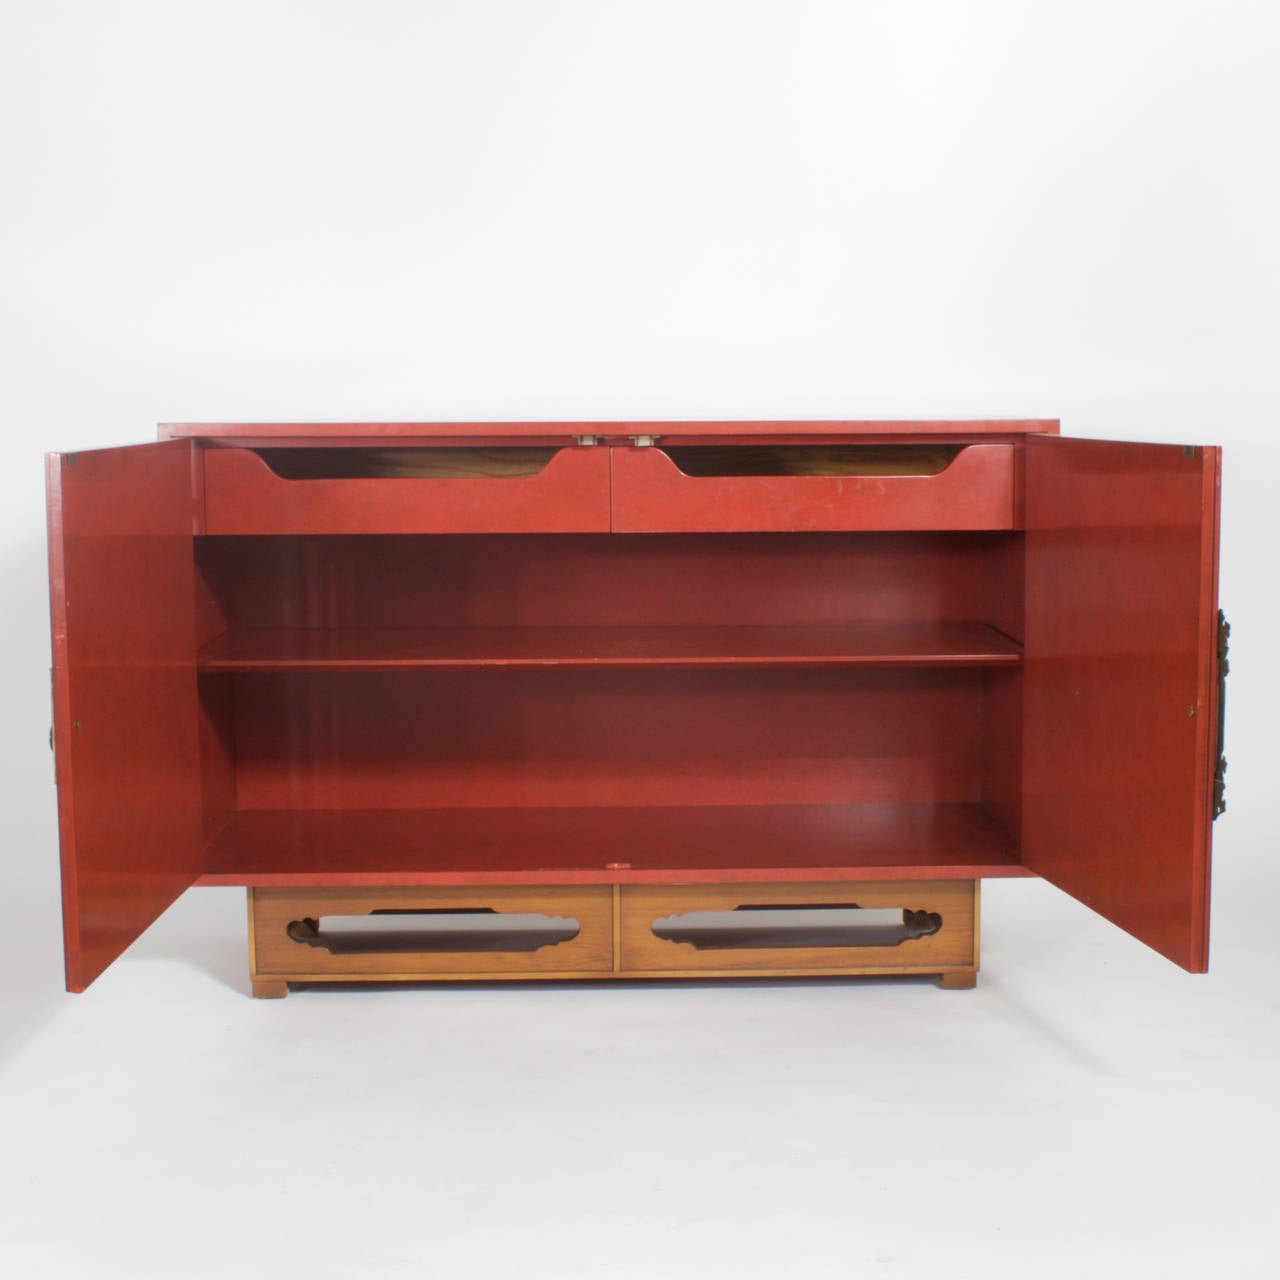 20th Century Modern Red Cabinet